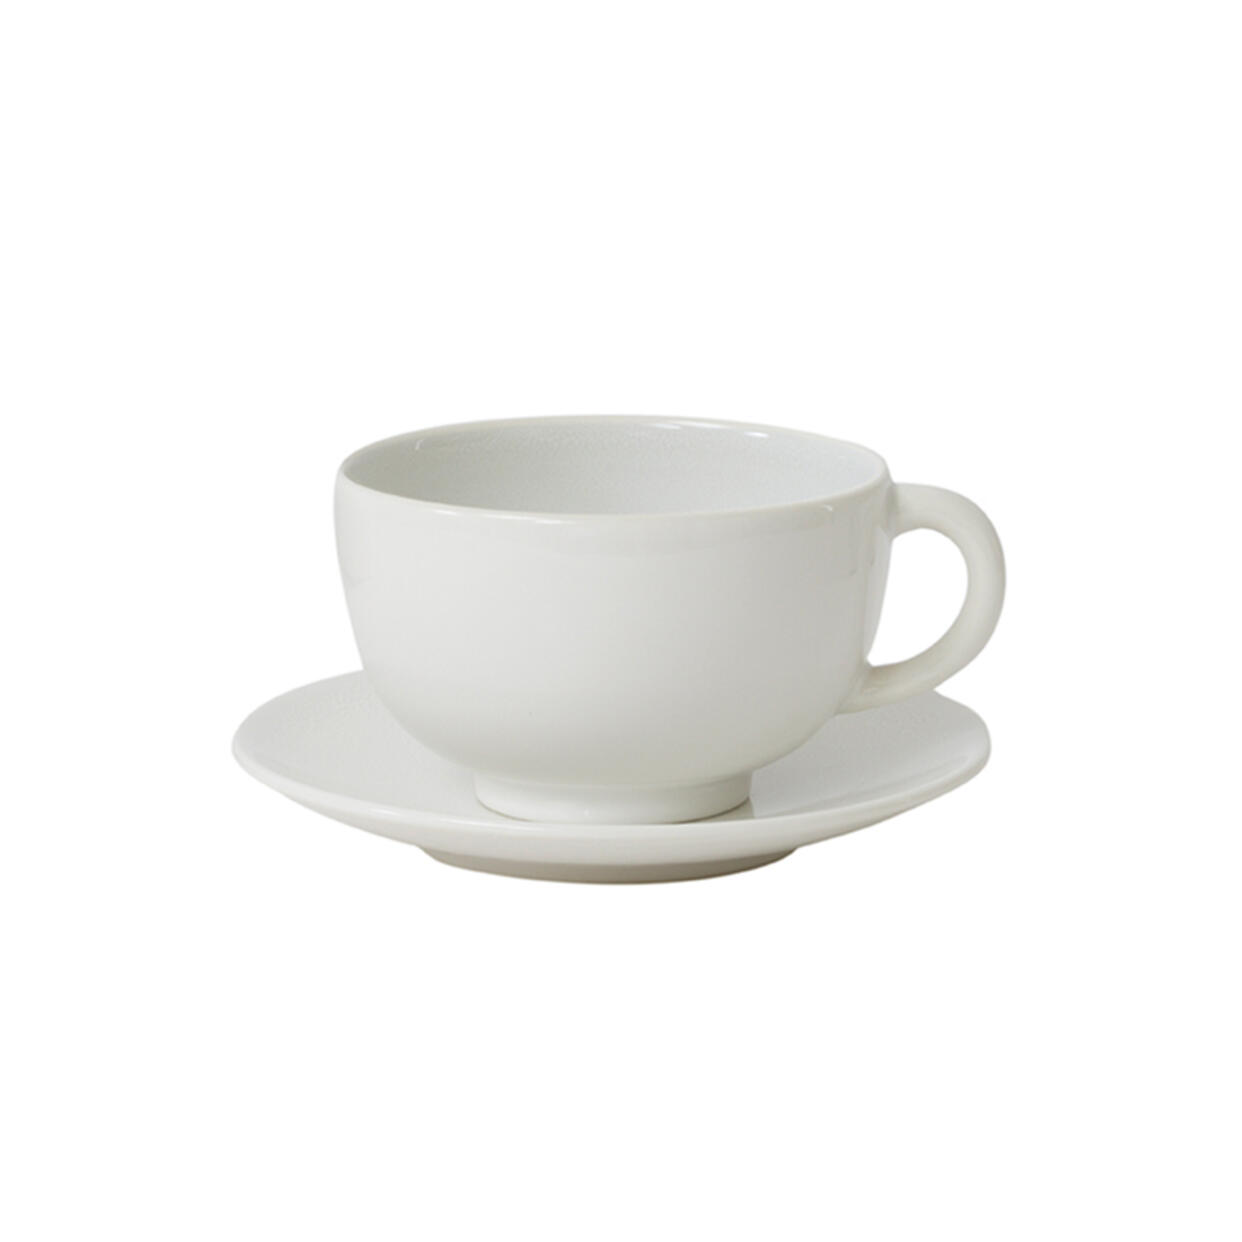 cup & saucer - l tourron neige ceramic manufacturer